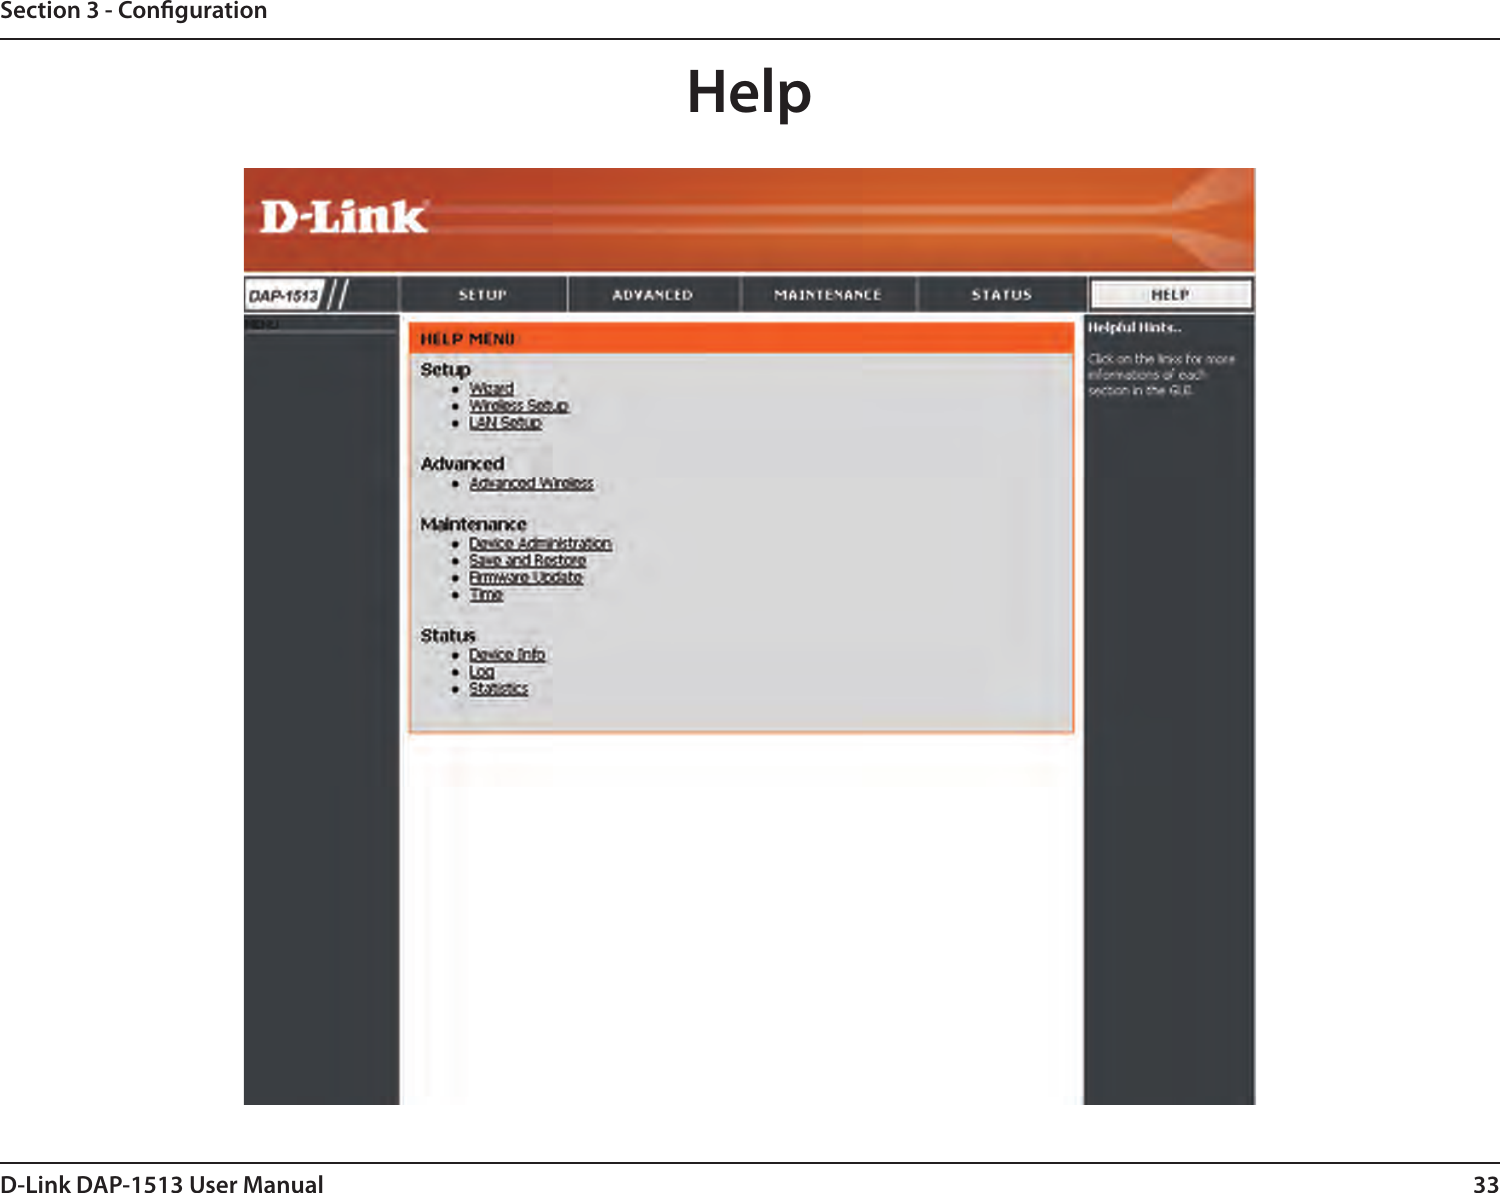 33D-Link DAP-1513 User ManualSection 3 - CongurationHelp